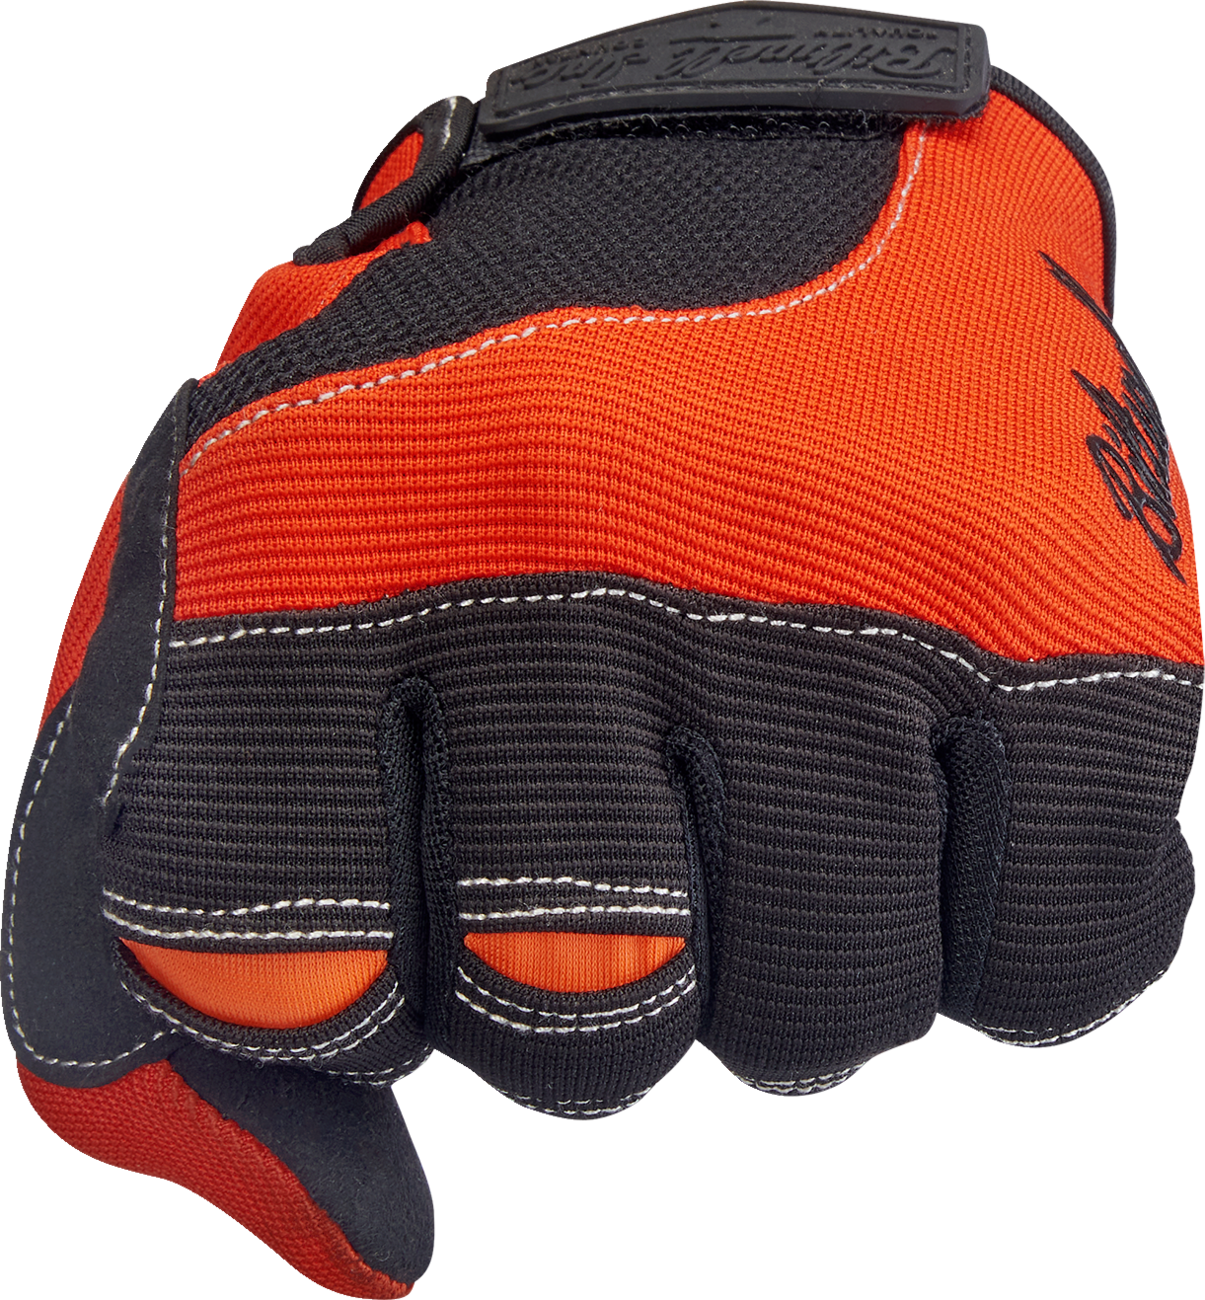 BILTWELL Moto Gloves - Orange/Black - Large 1501-0106-004